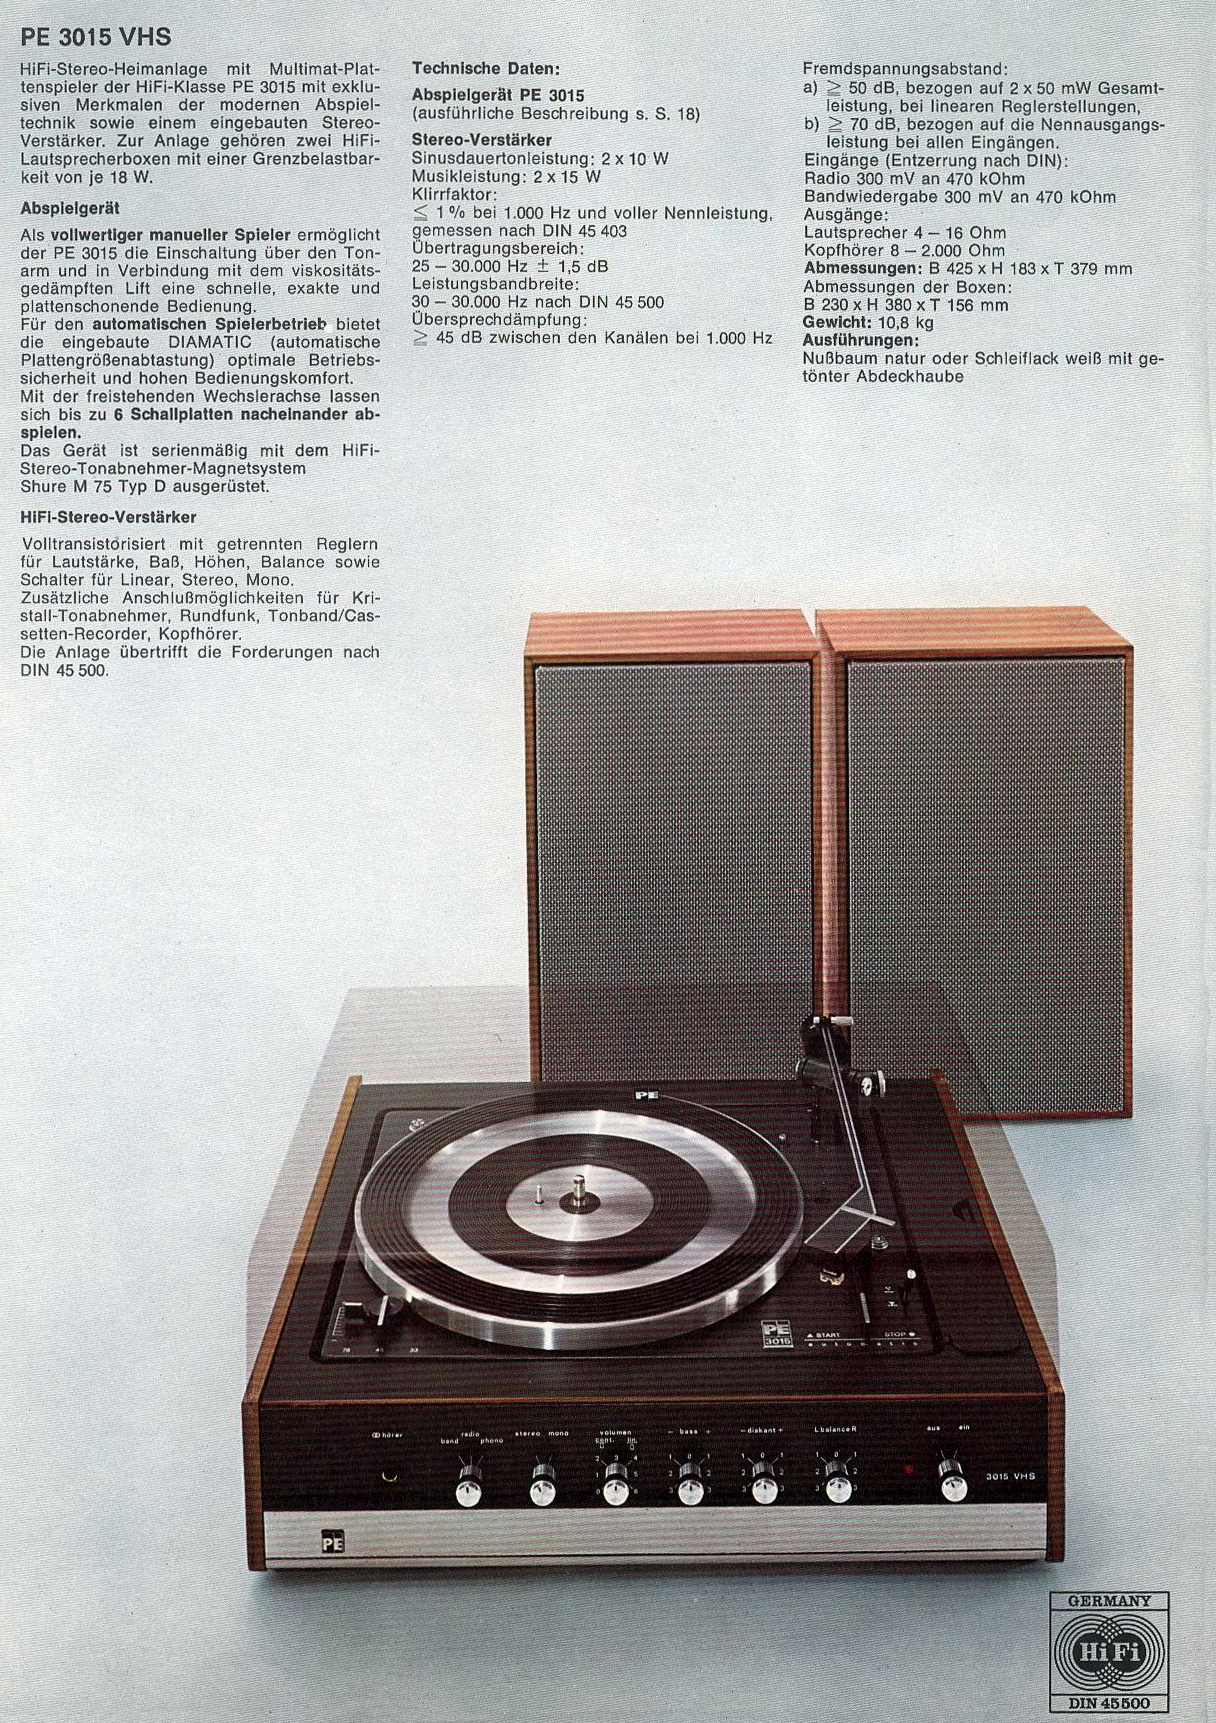 Perpetuum Ebner PE 3015 VHS-Prospekt-1972.jpg